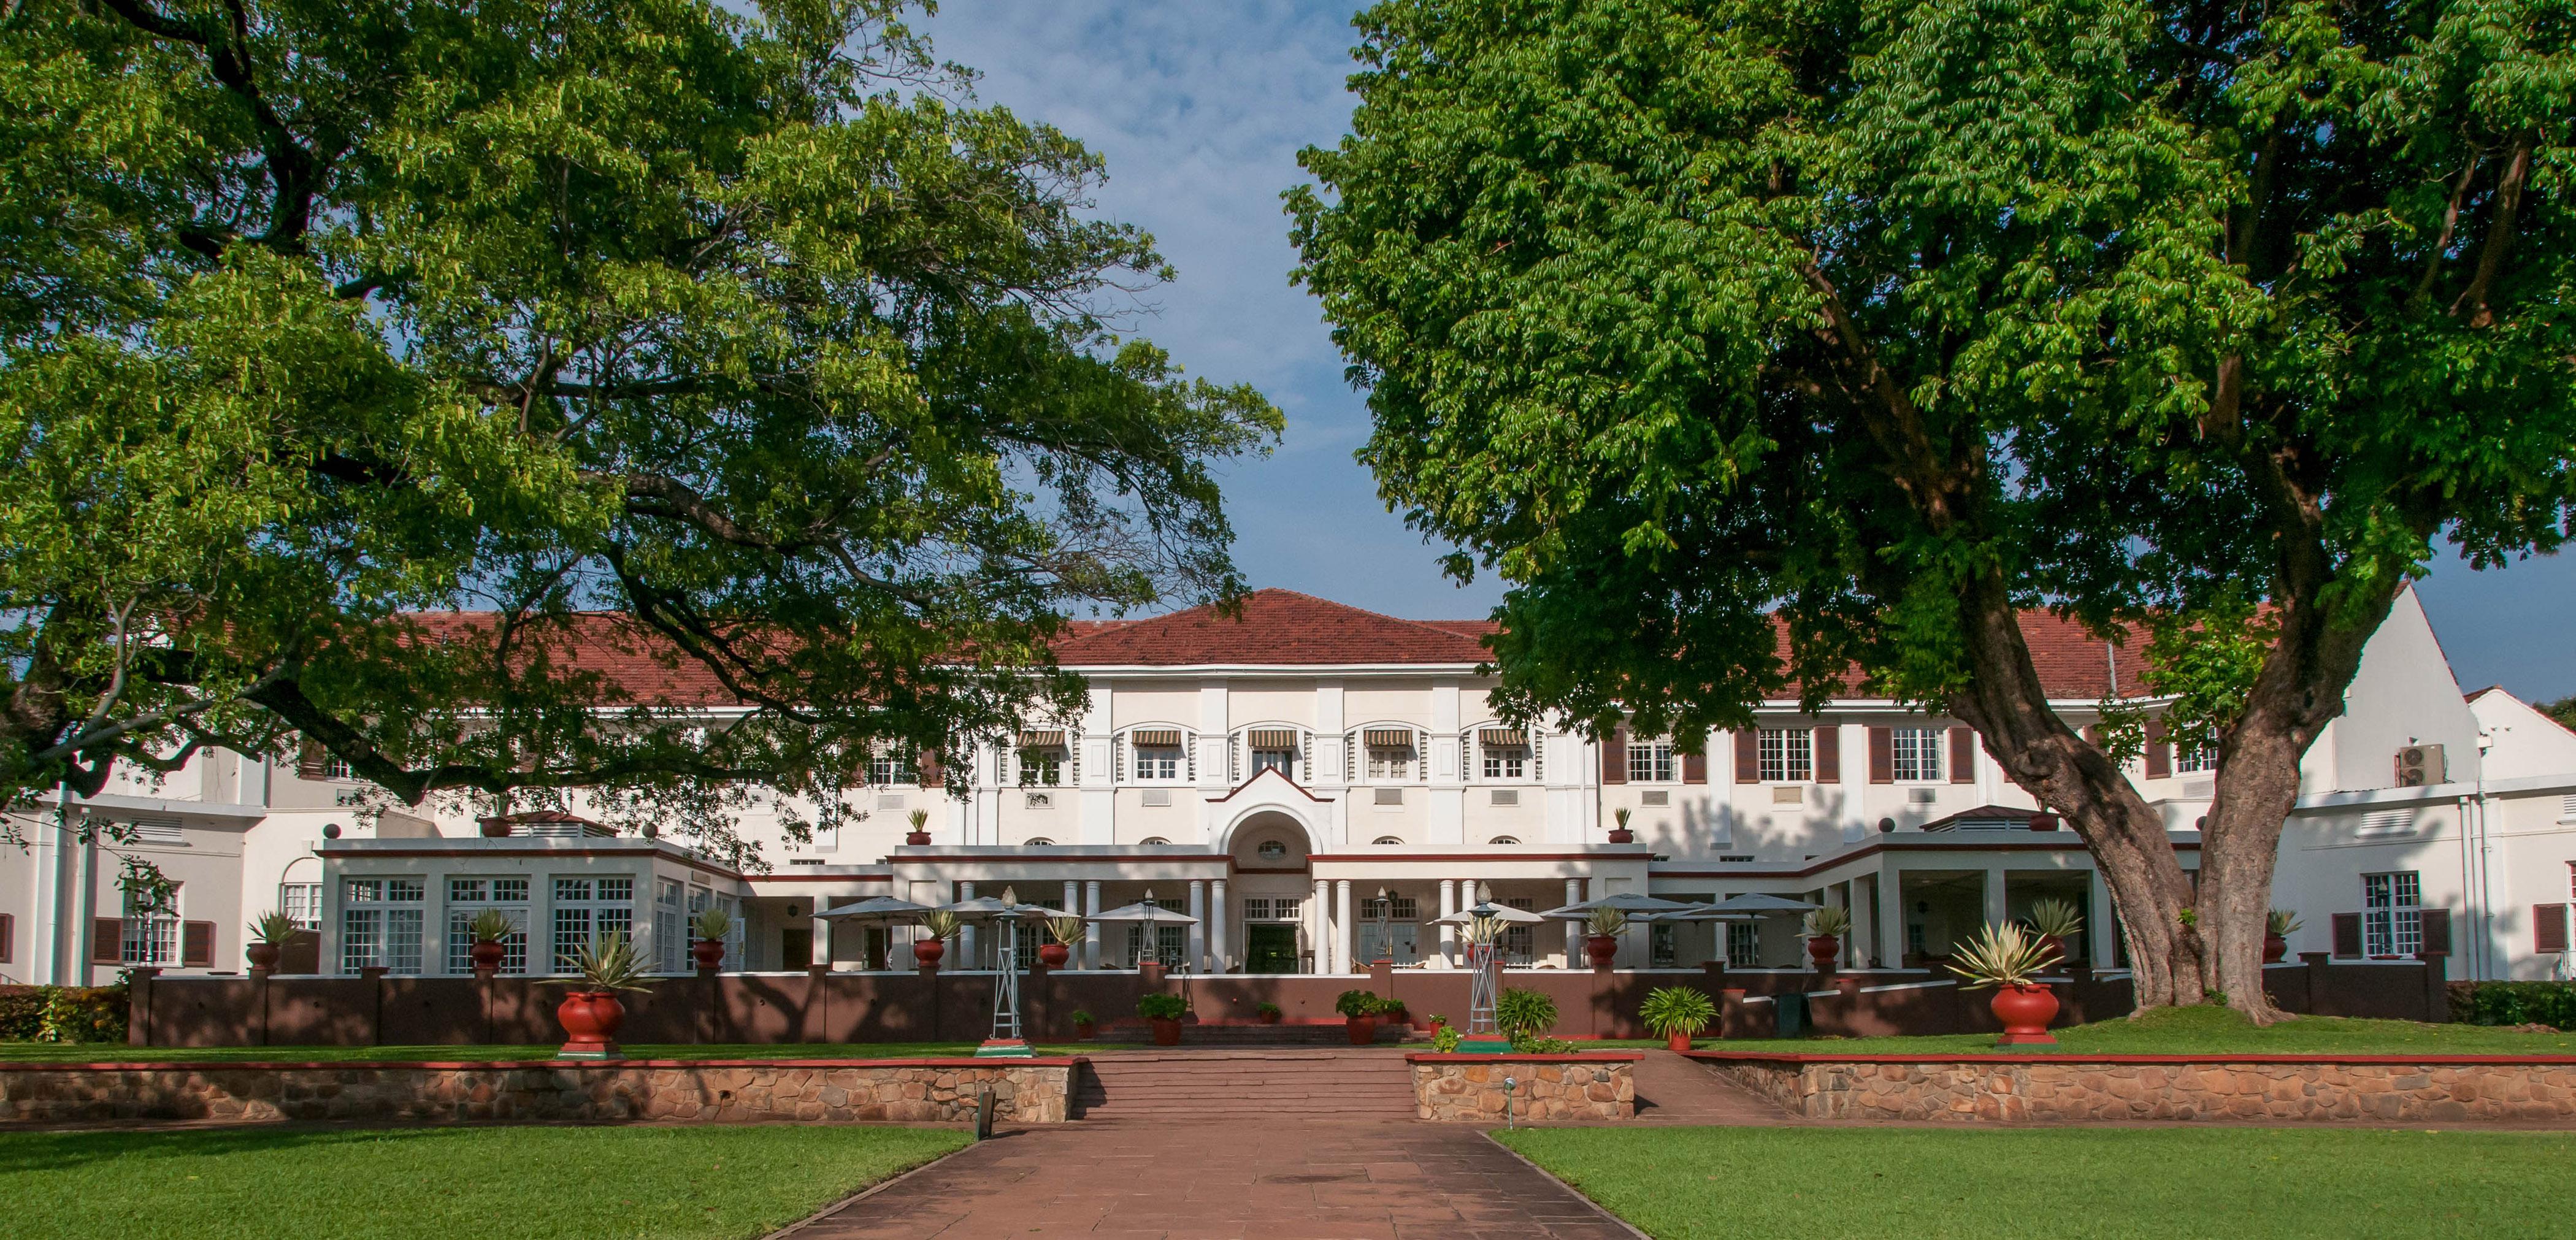 The Victoria Falls Hotel Exterior photo